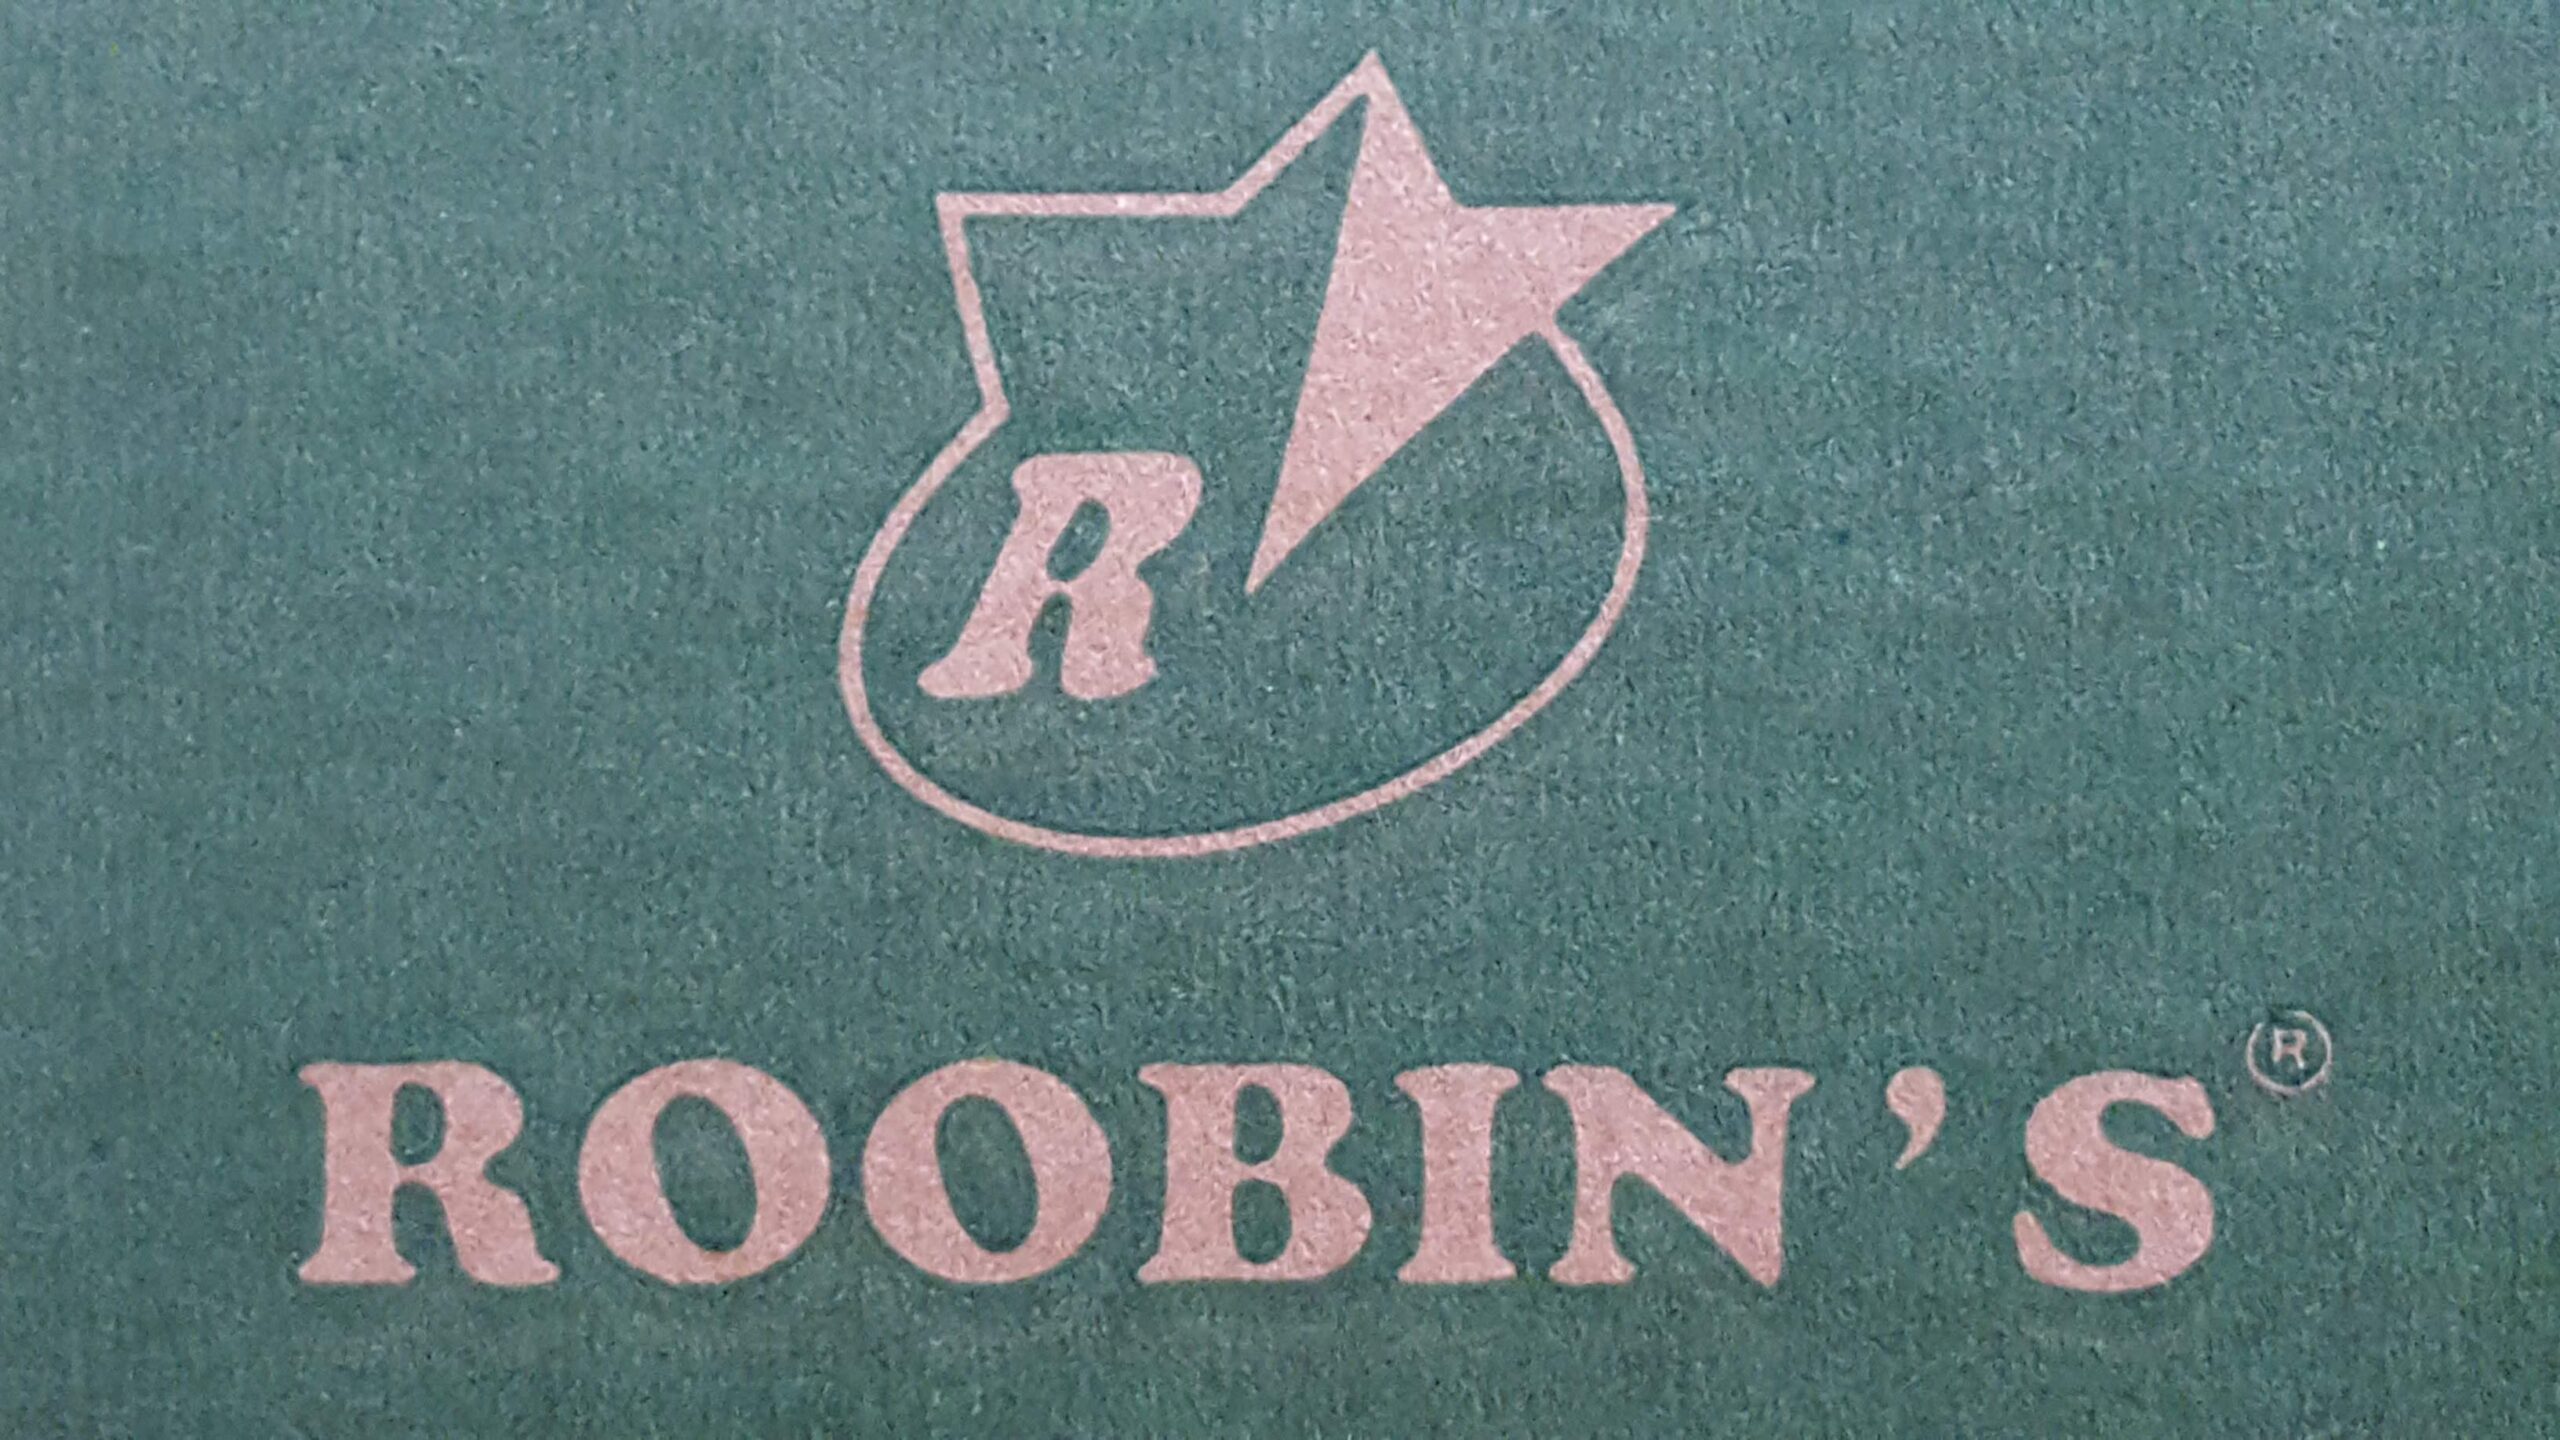 Robbins